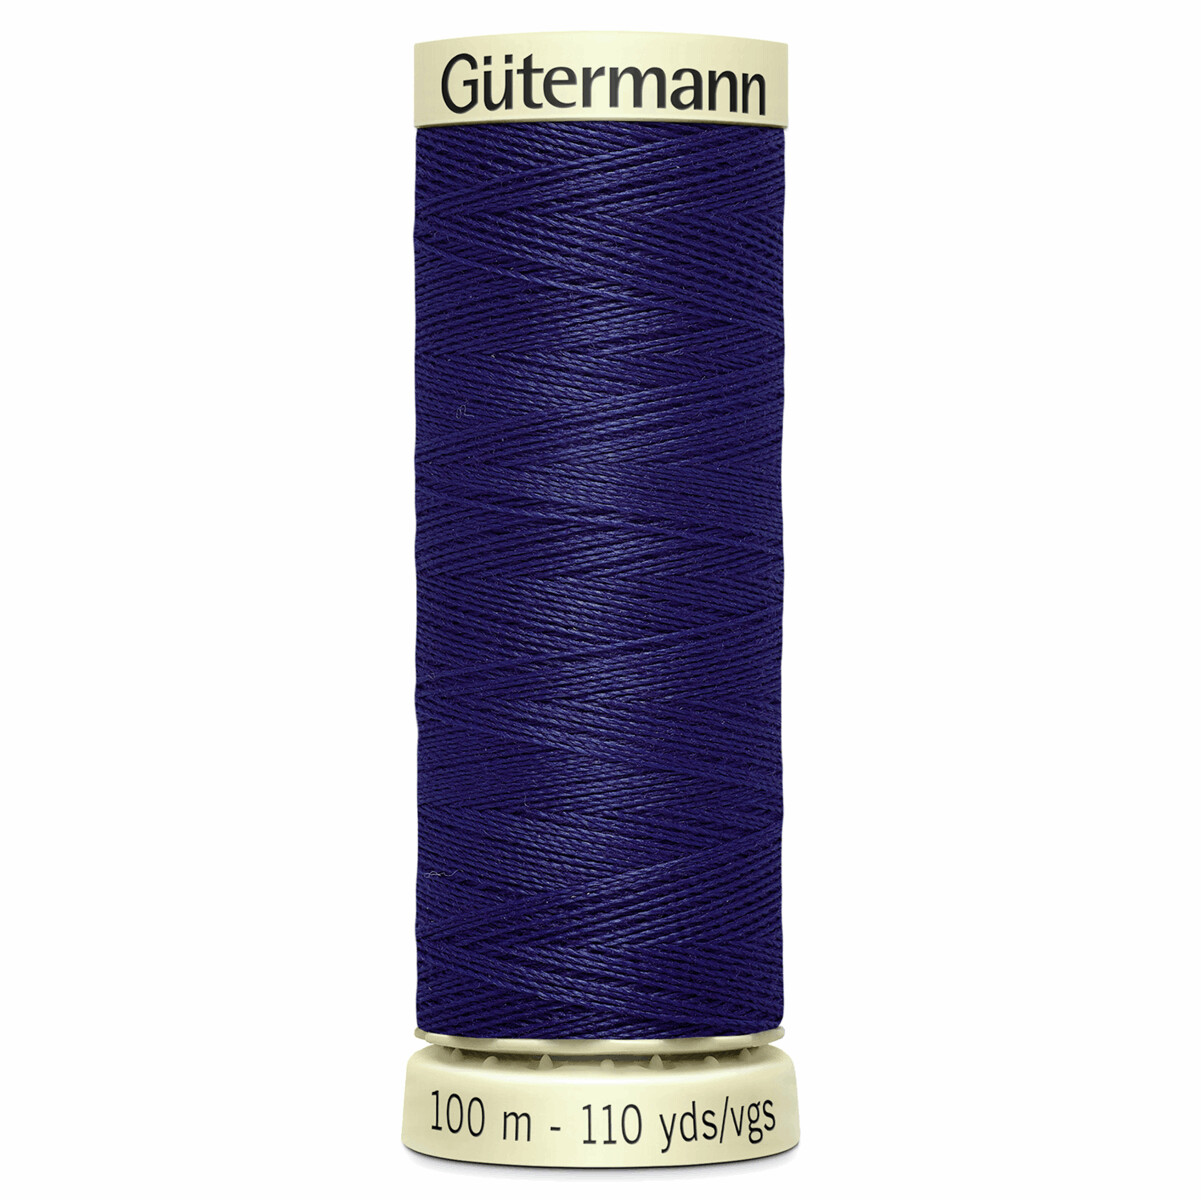 Gutermann Sew-All thread 66